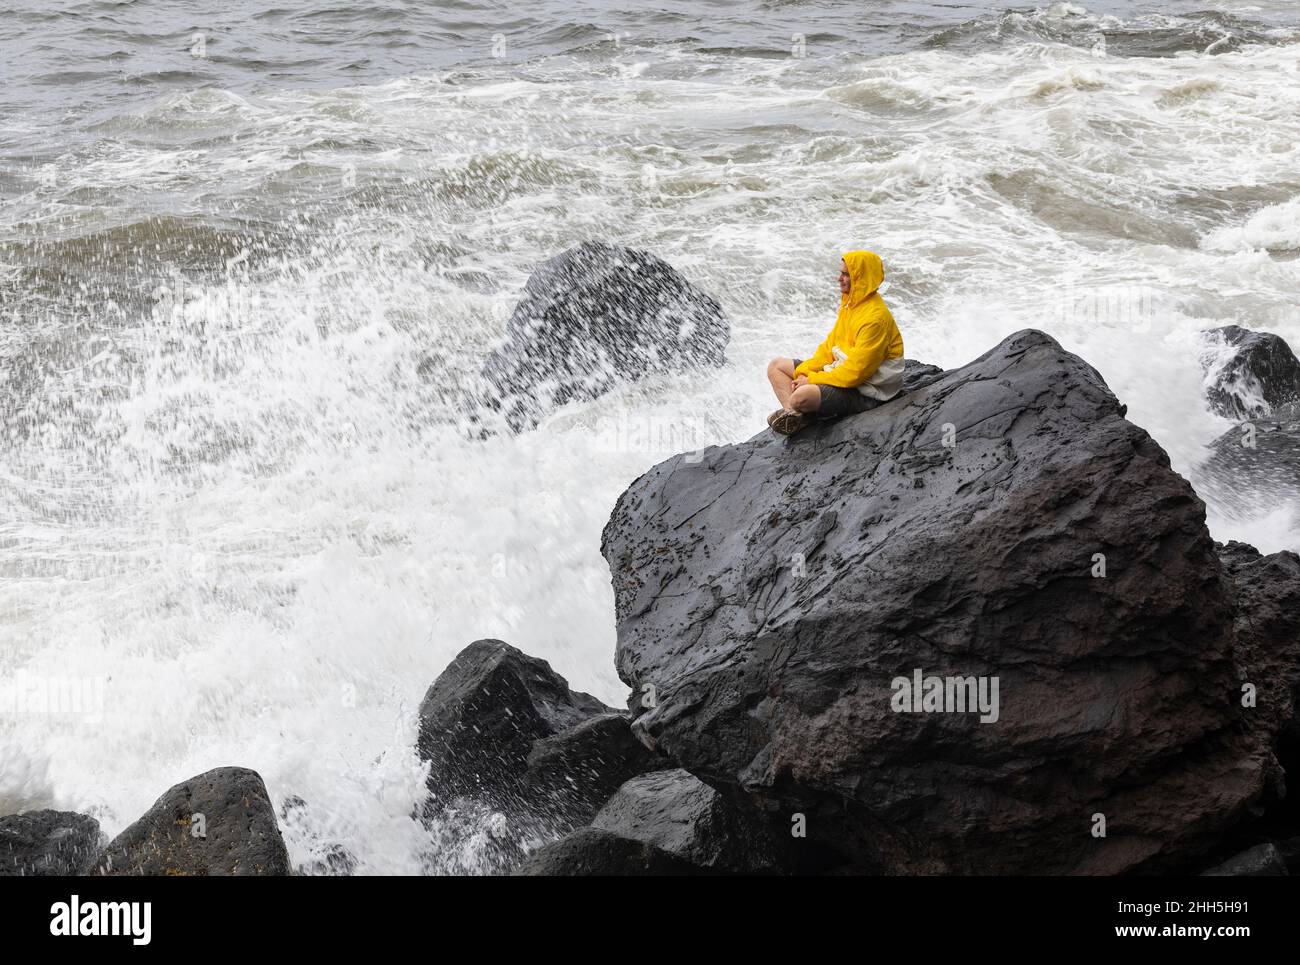 Young man wearing raincoat sitting on rock by waves splashing in sea, Rocha Da Relva, San Miguel Island, Azores, Portugal Stock Photo